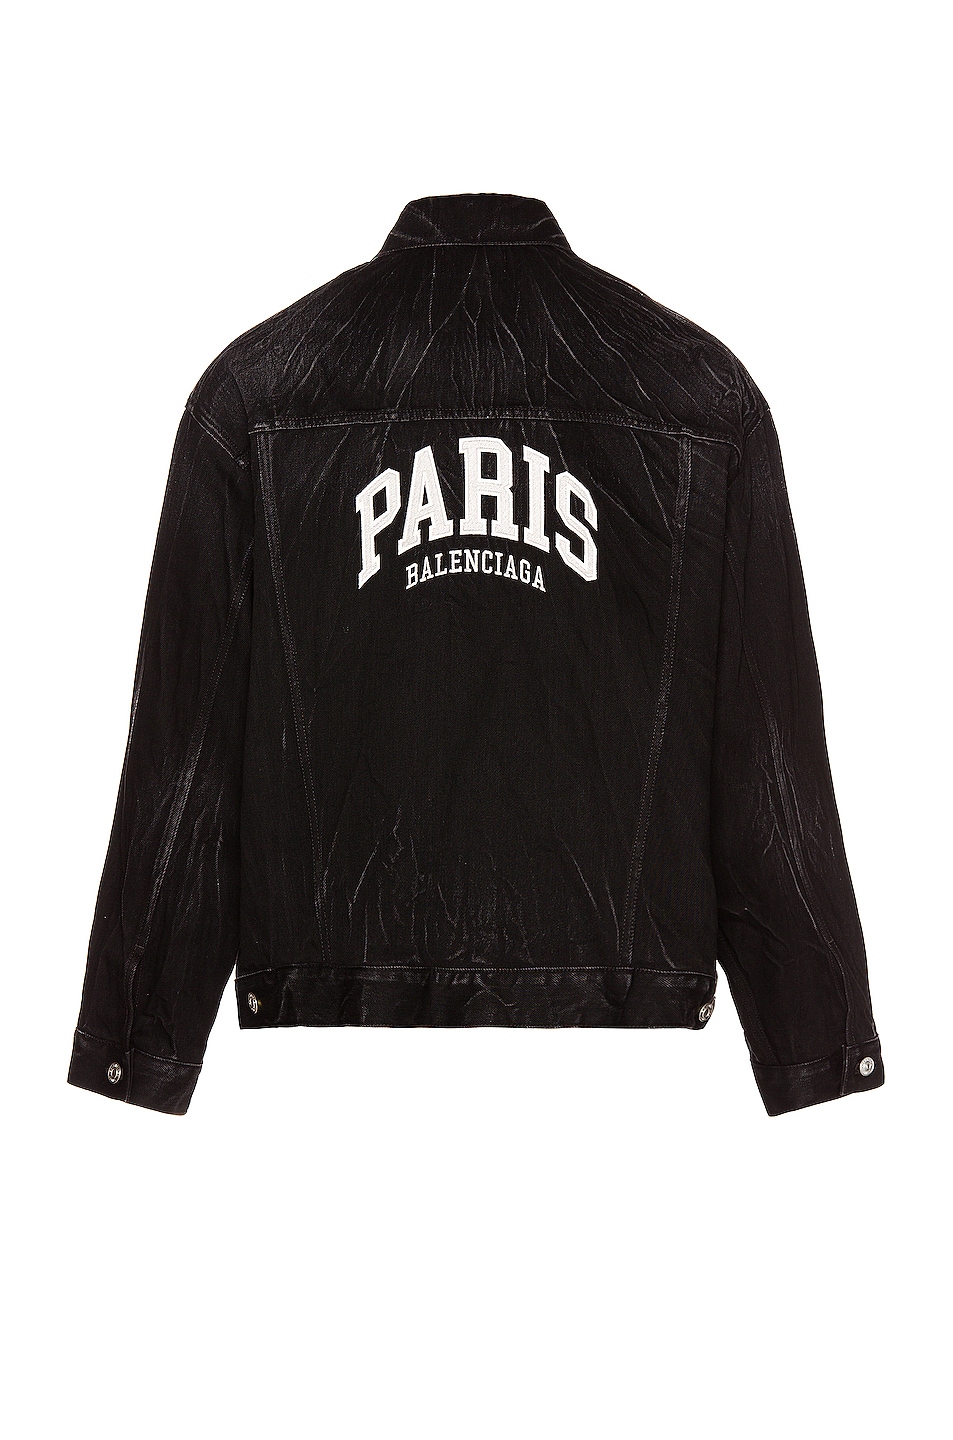 Image 1 of Balenciaga Large Fit Paris Denim Jacker in Washed Black & White